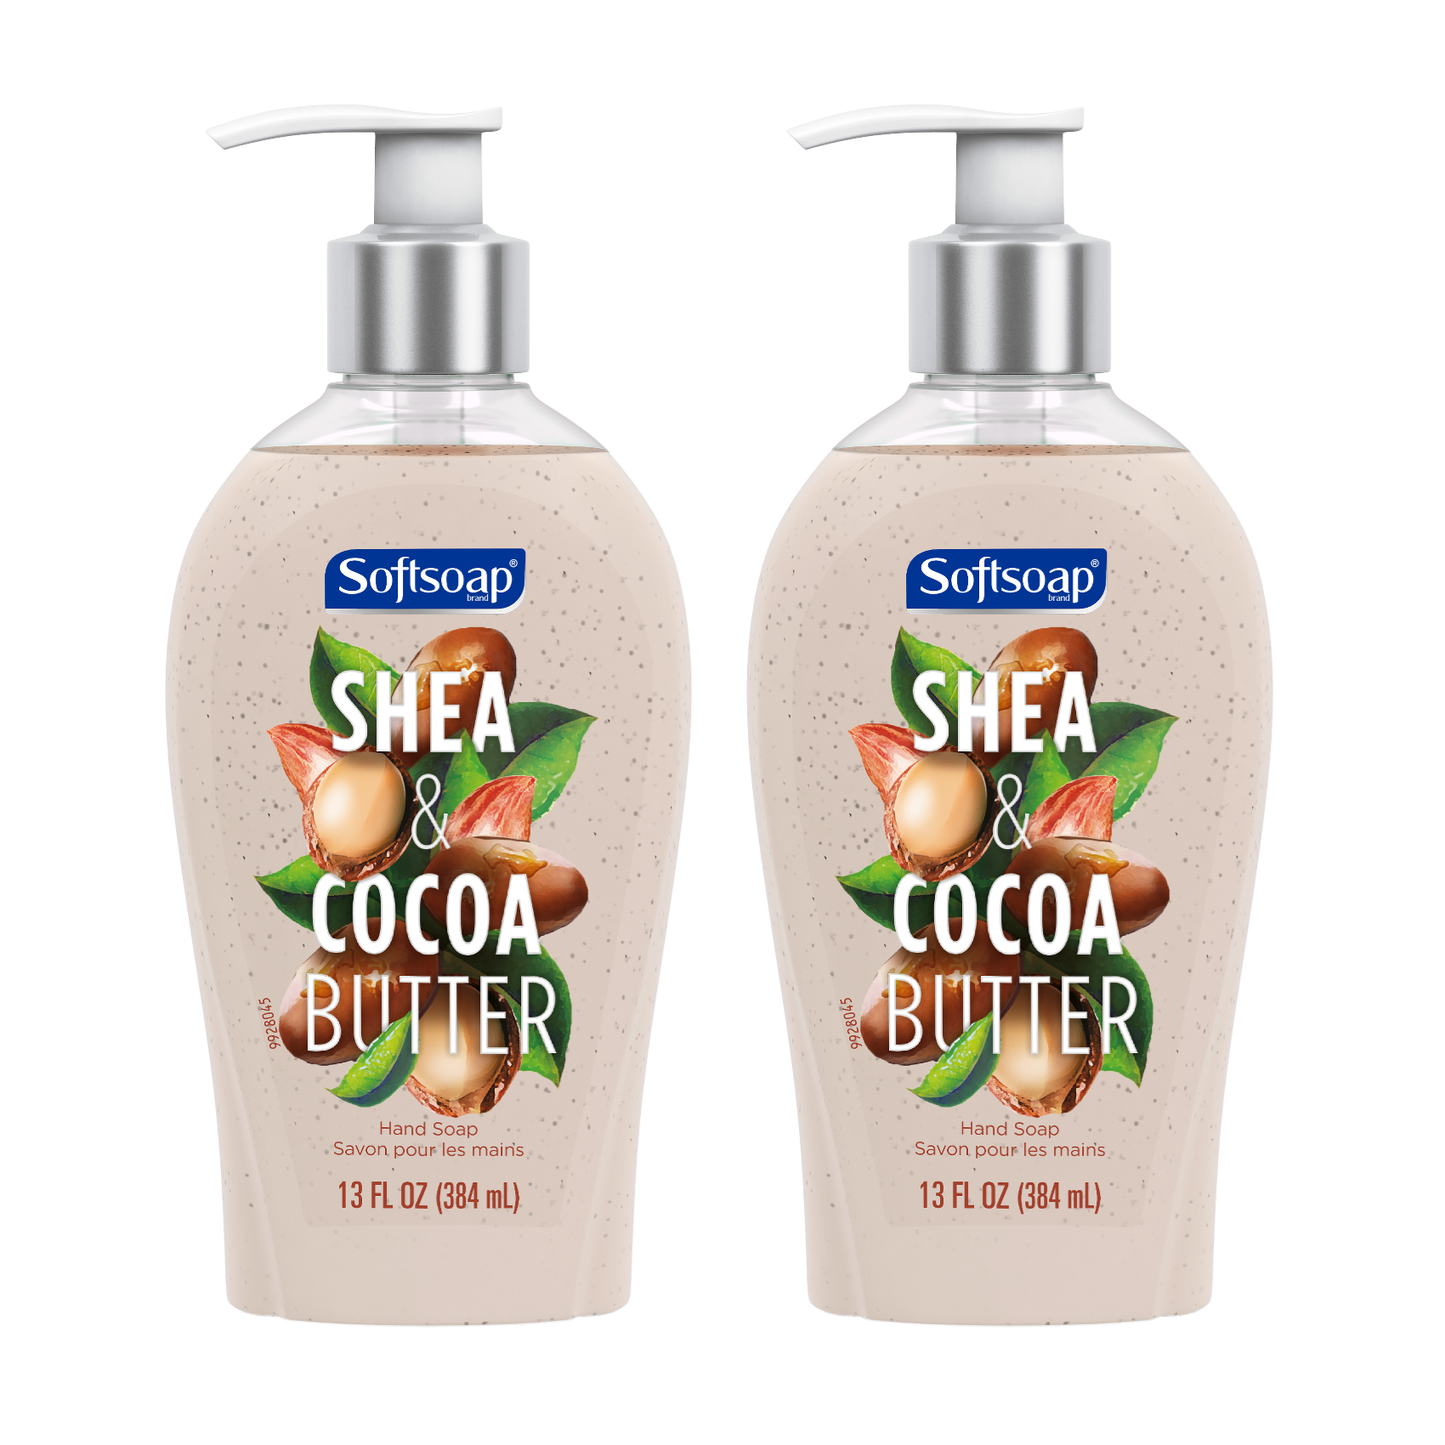 Softsoap Shea & Cocoa Butter Hand Soap 13 oz 384 ml "2-PACK"